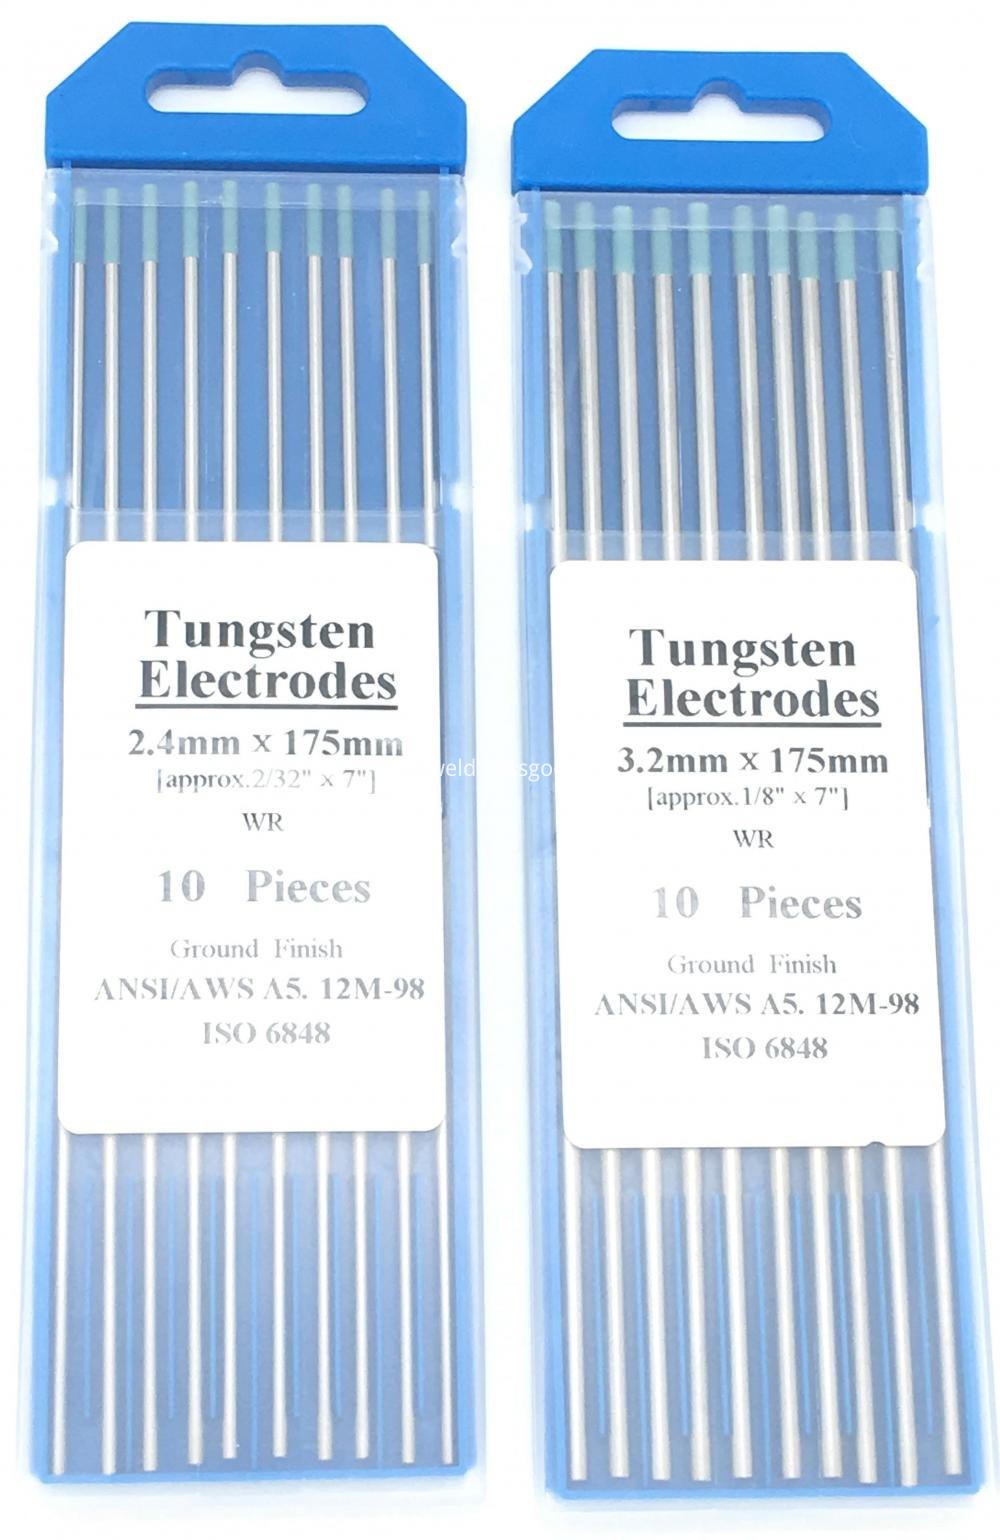 Wr Tig Welding Tungsten Electrodes Replaces Ws Tig Rod Tungsten Electrode